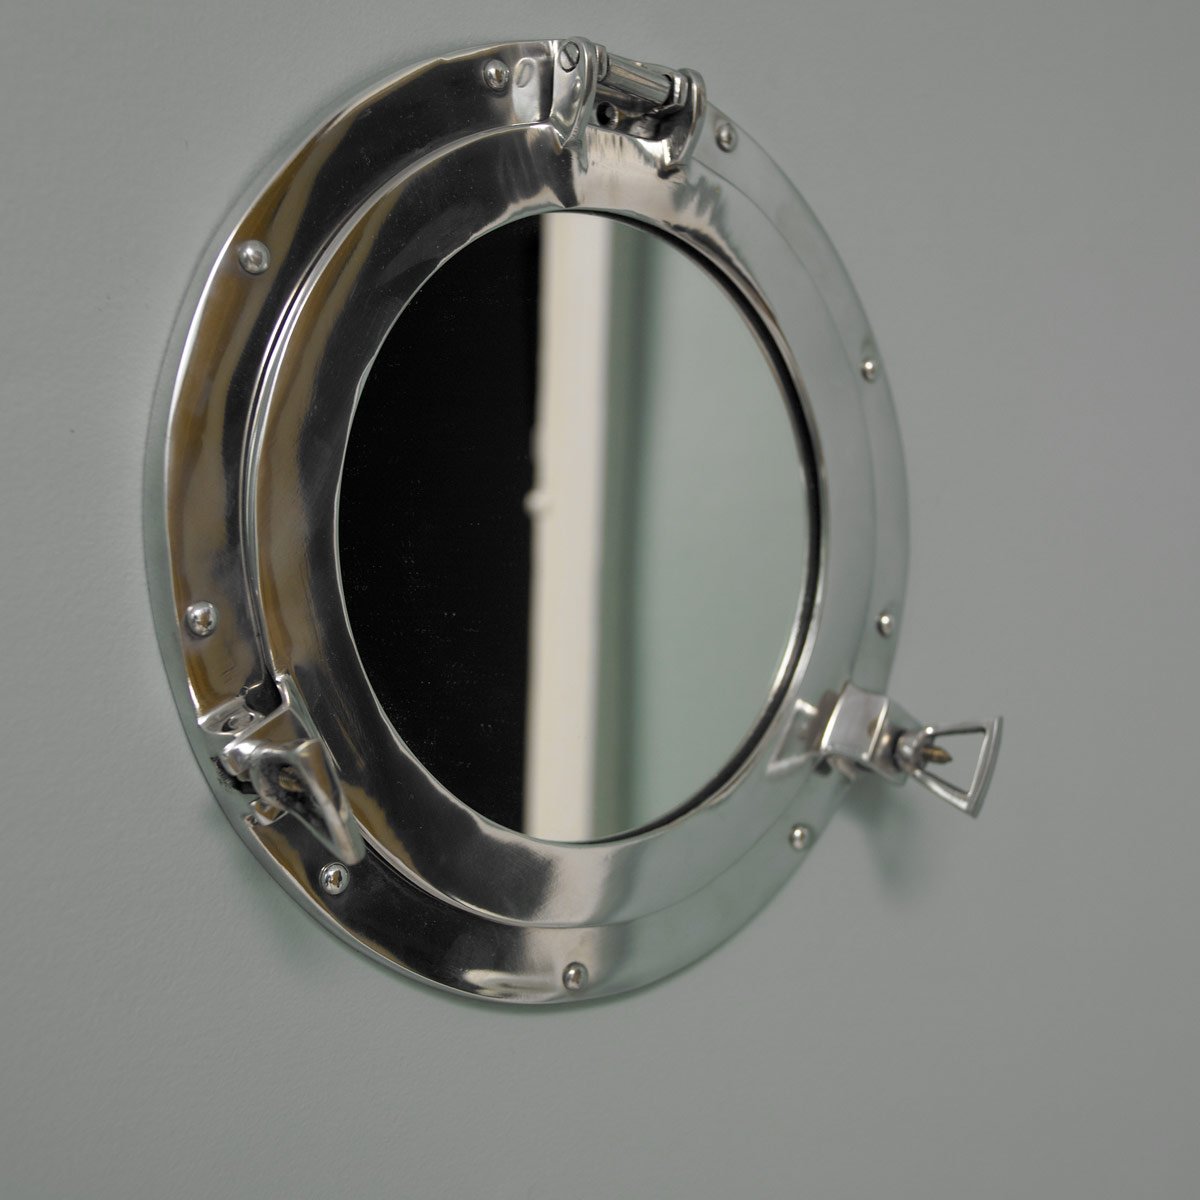 Silver Metal Porthole Mirror 28cm x 28cm